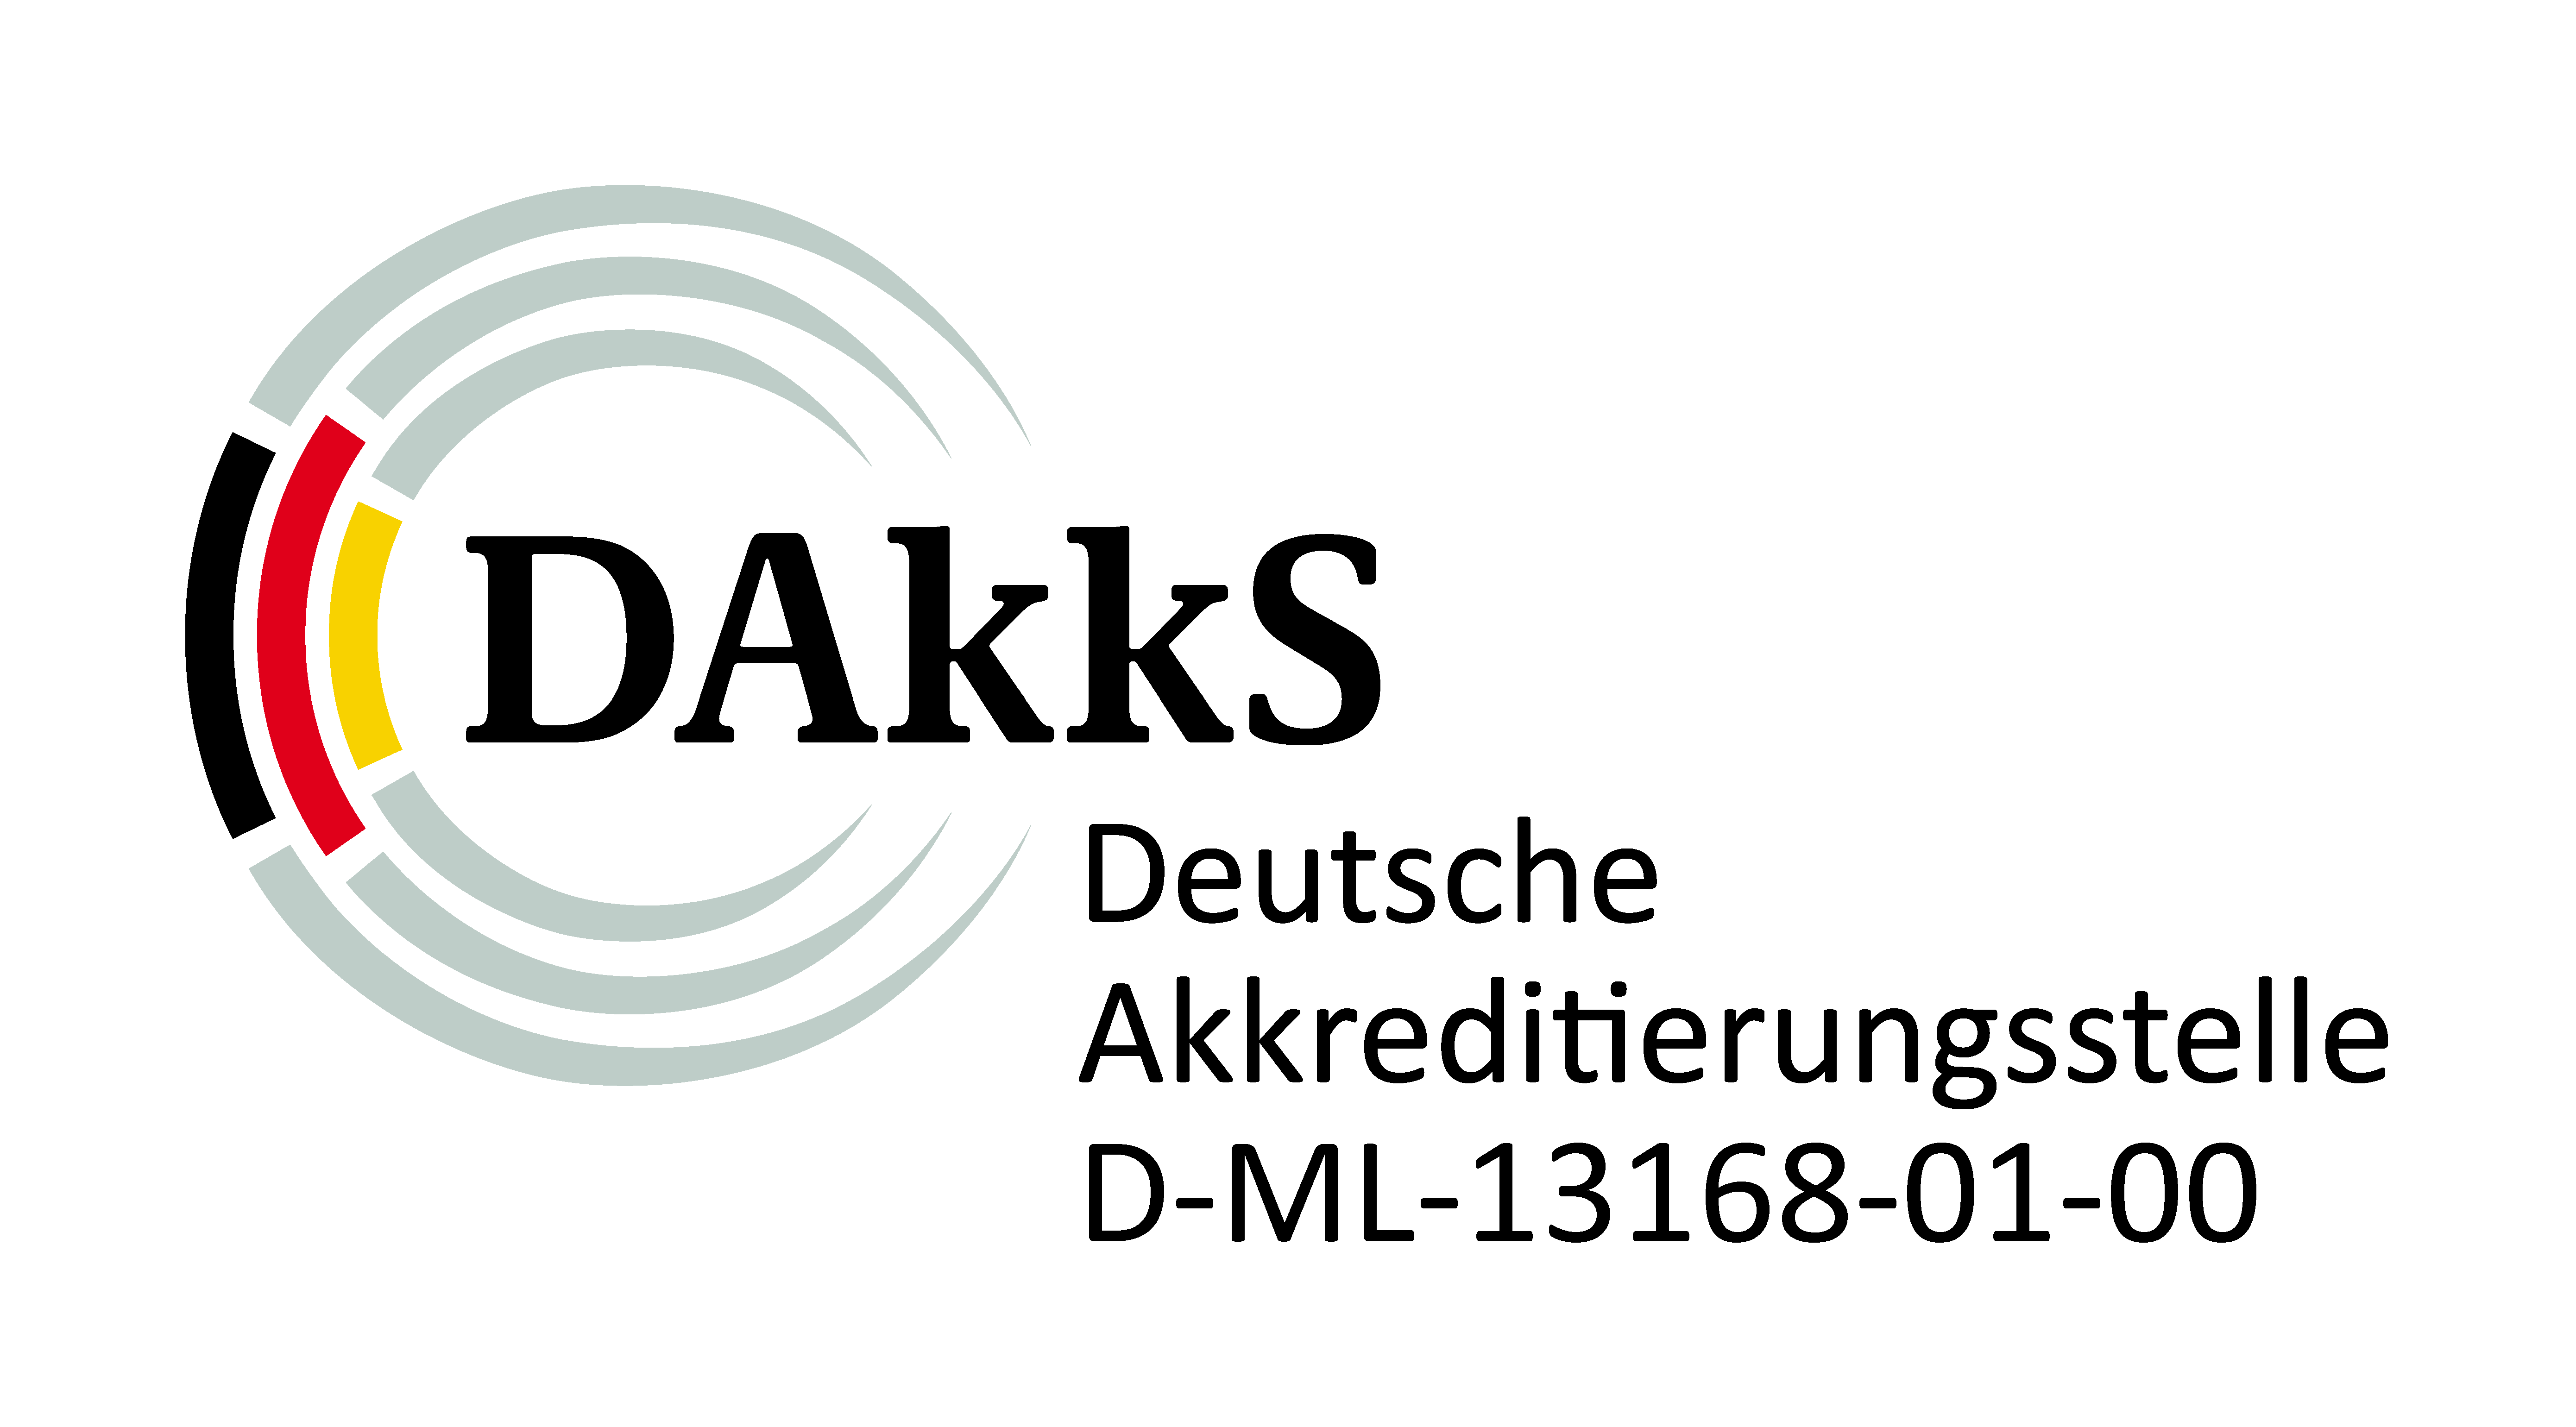 DakkS Akkreditierung